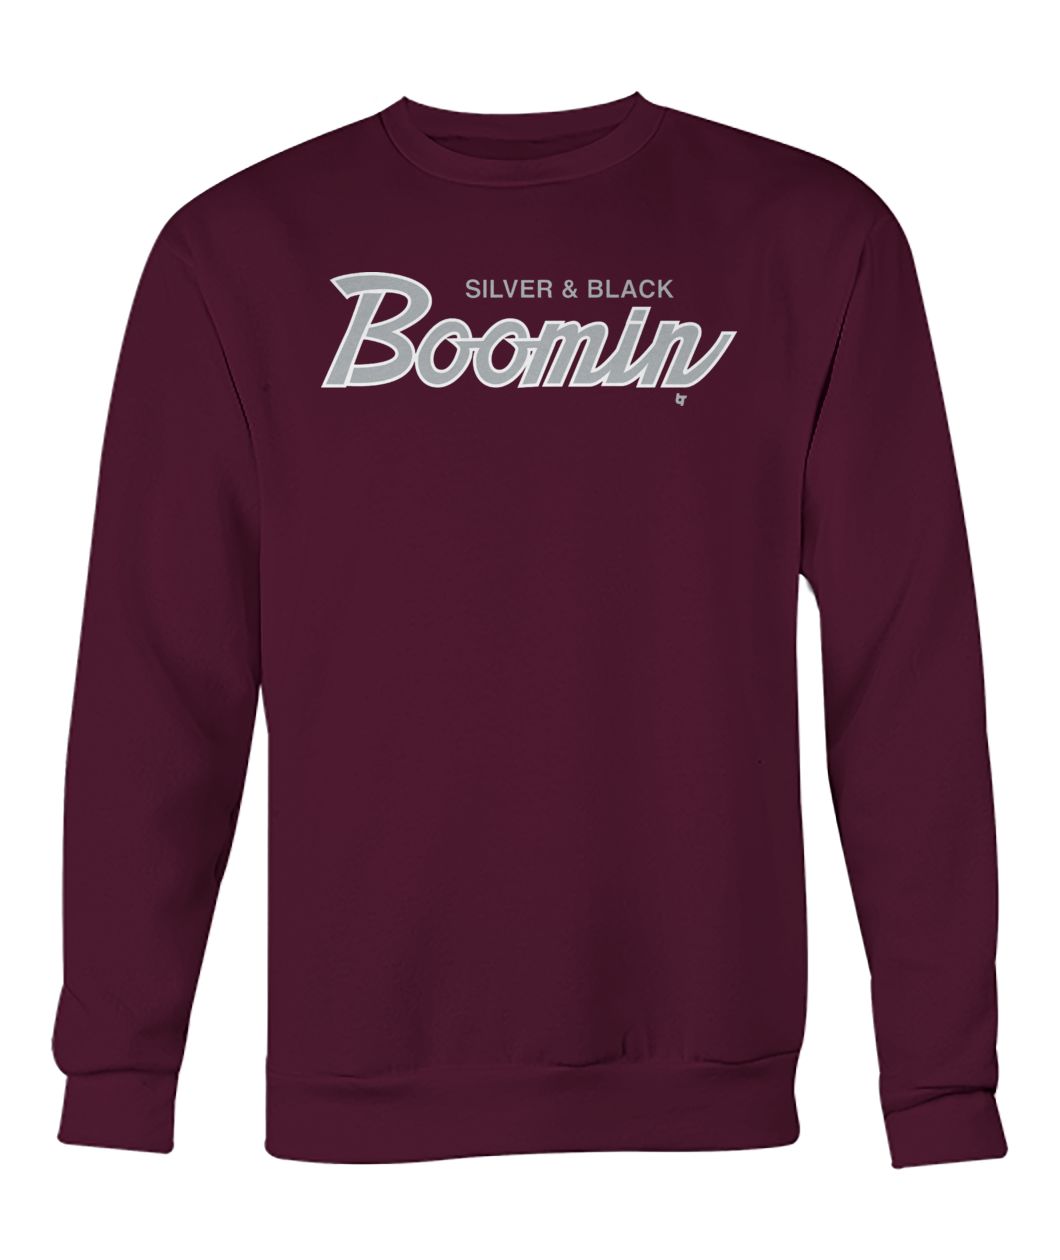 The silver & black boomin era has begun with new antonio brown crew neck sweatshirt